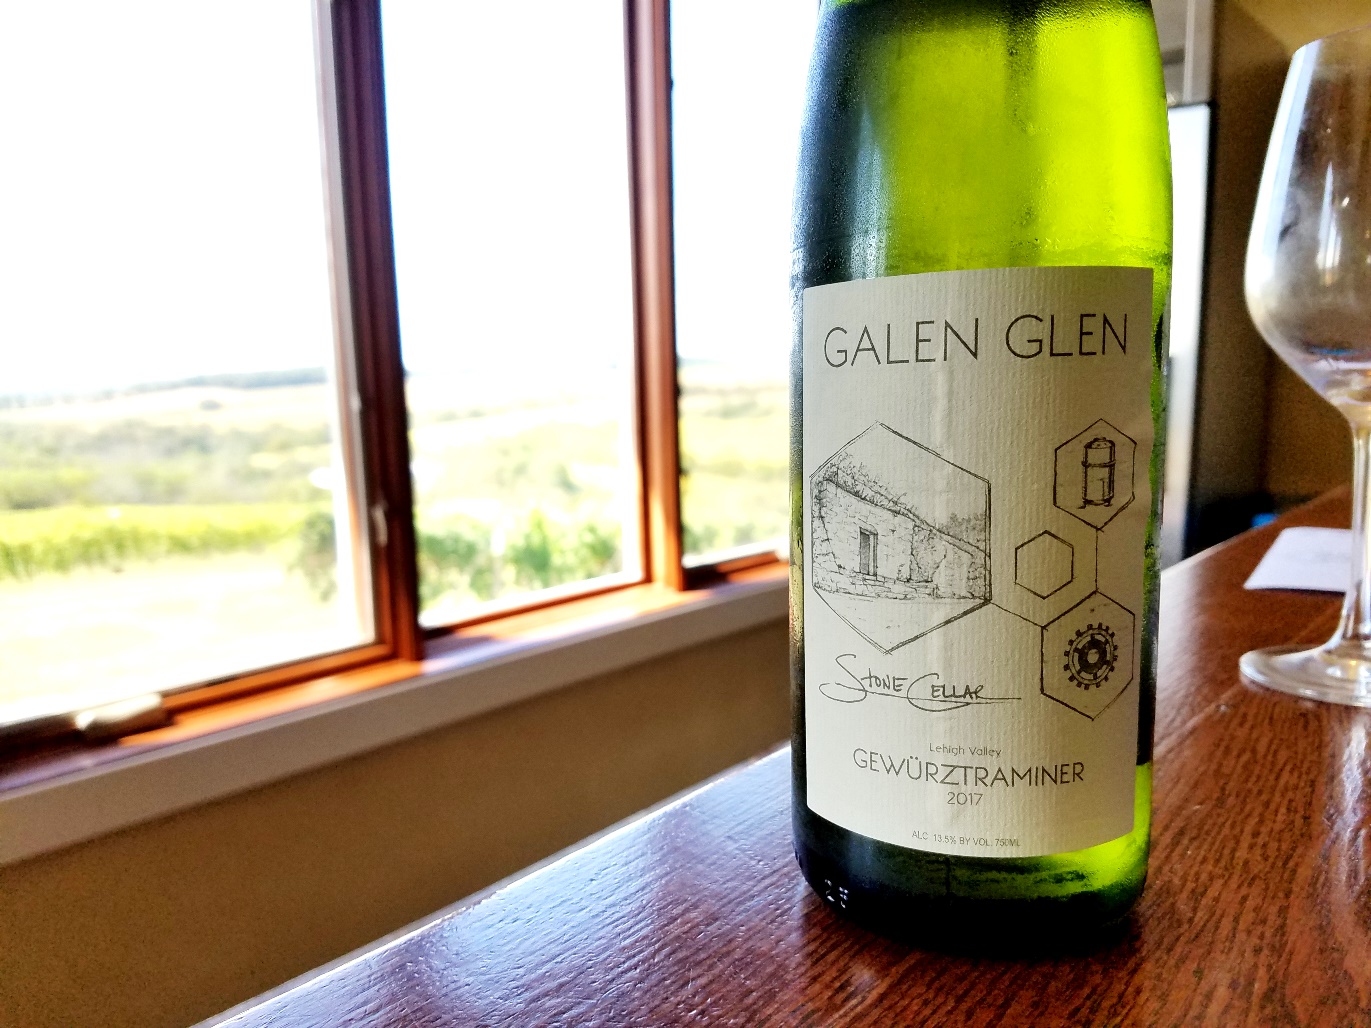 Galen Glen, Gewürztraminer 2017, Stone Cellar, Lehigh Valley, Pennsylvania, Wine Casual